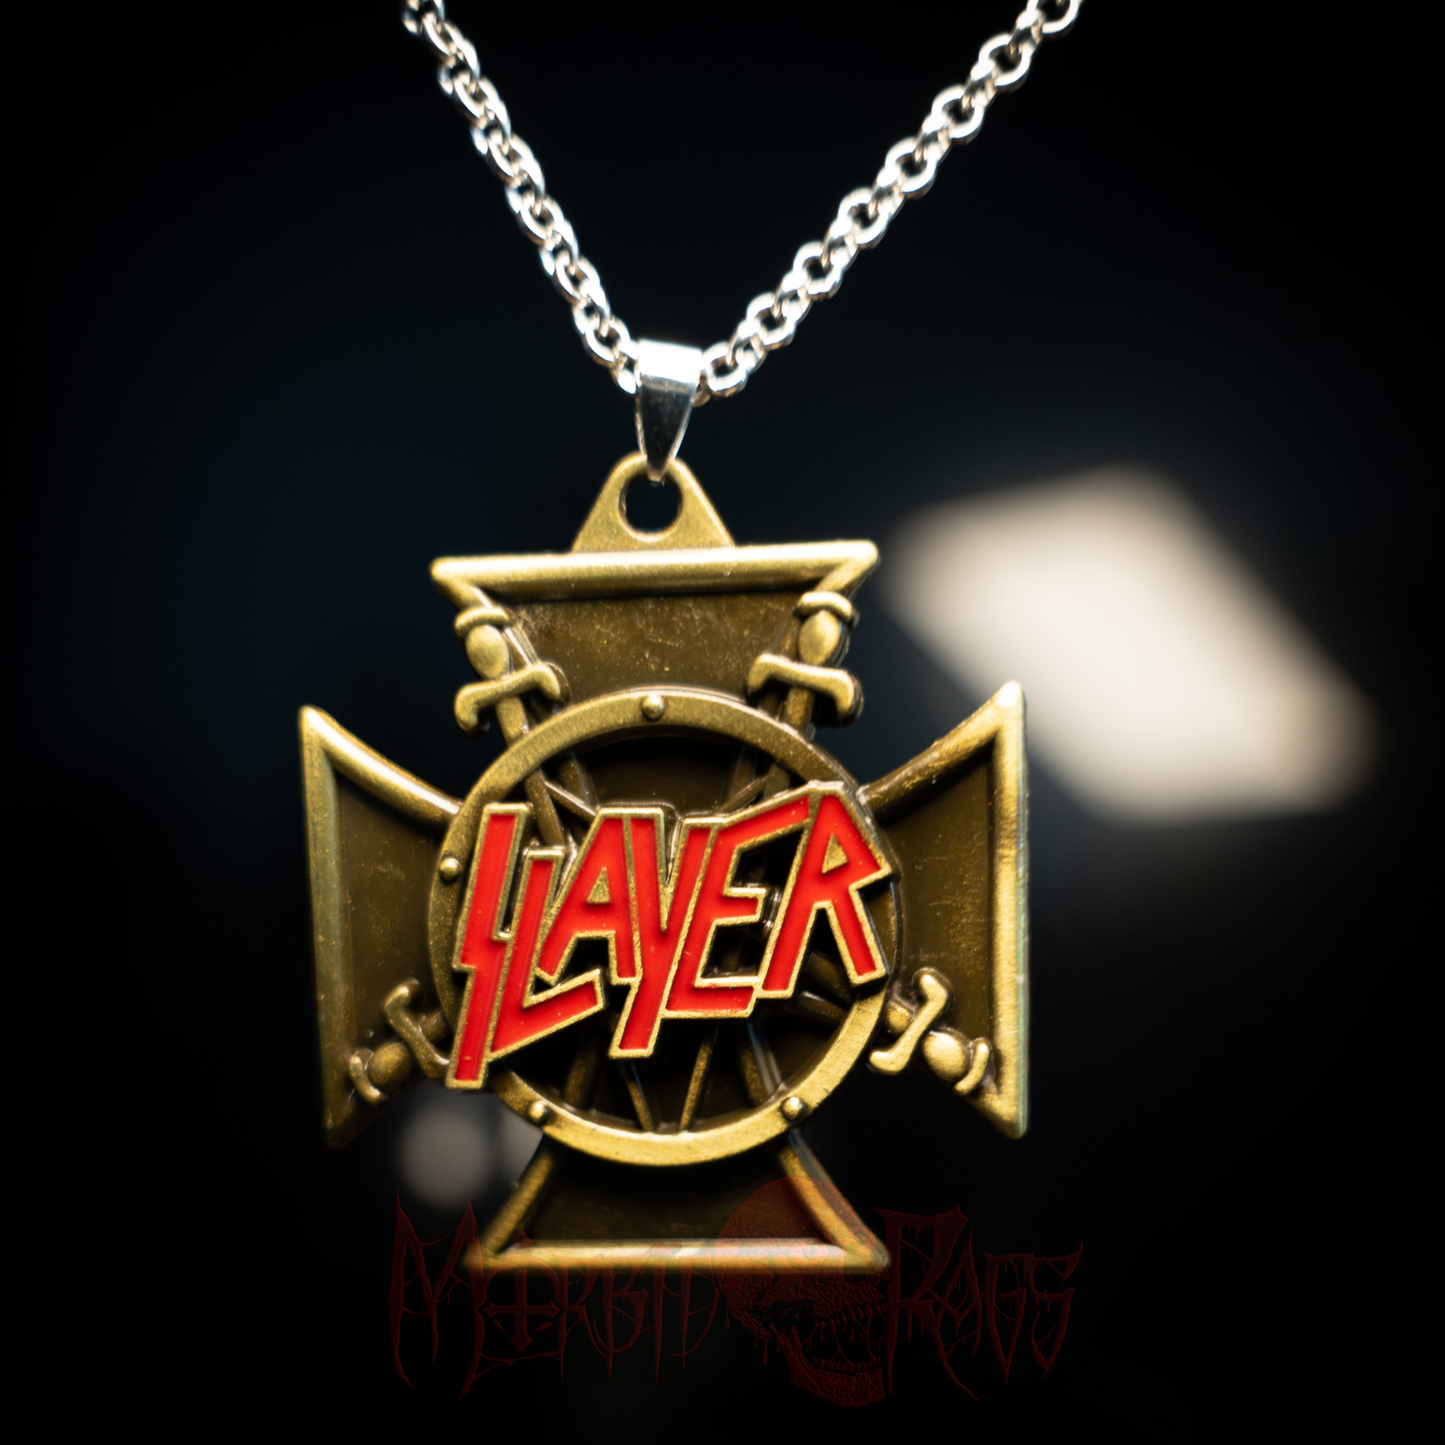 Slayer Iron Cross Necklace